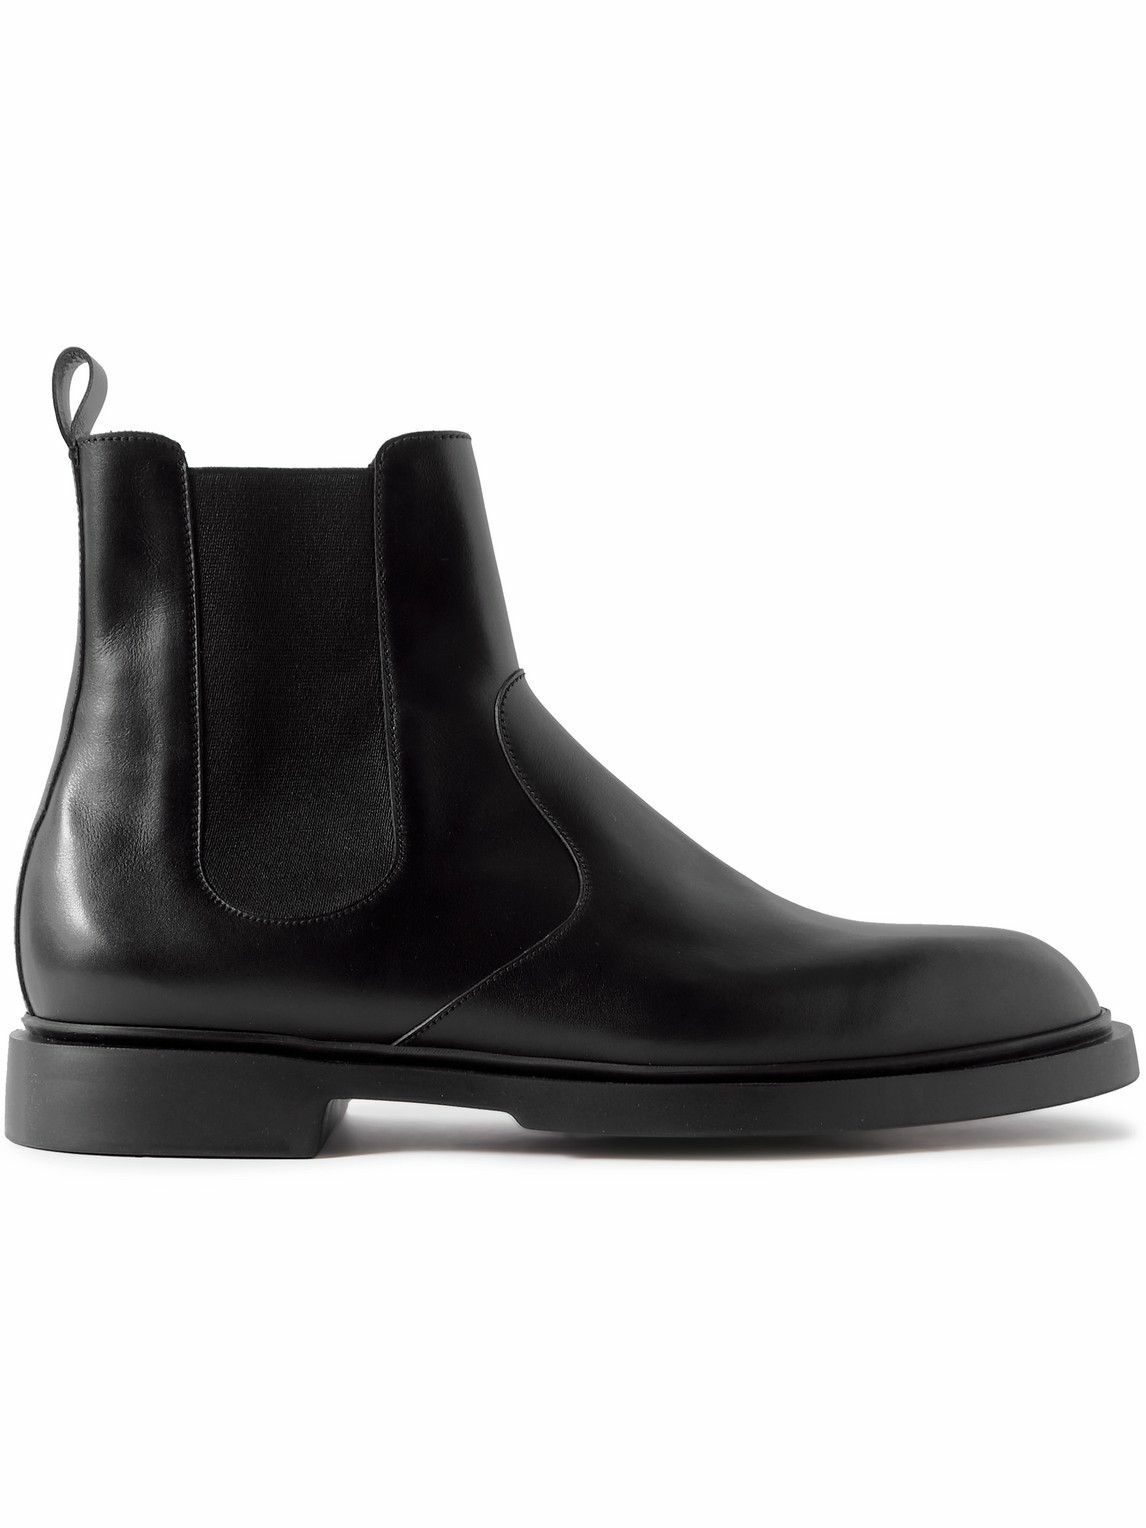 J.M. Weston - Leather Chelsea Boots - Black J.M. Weston